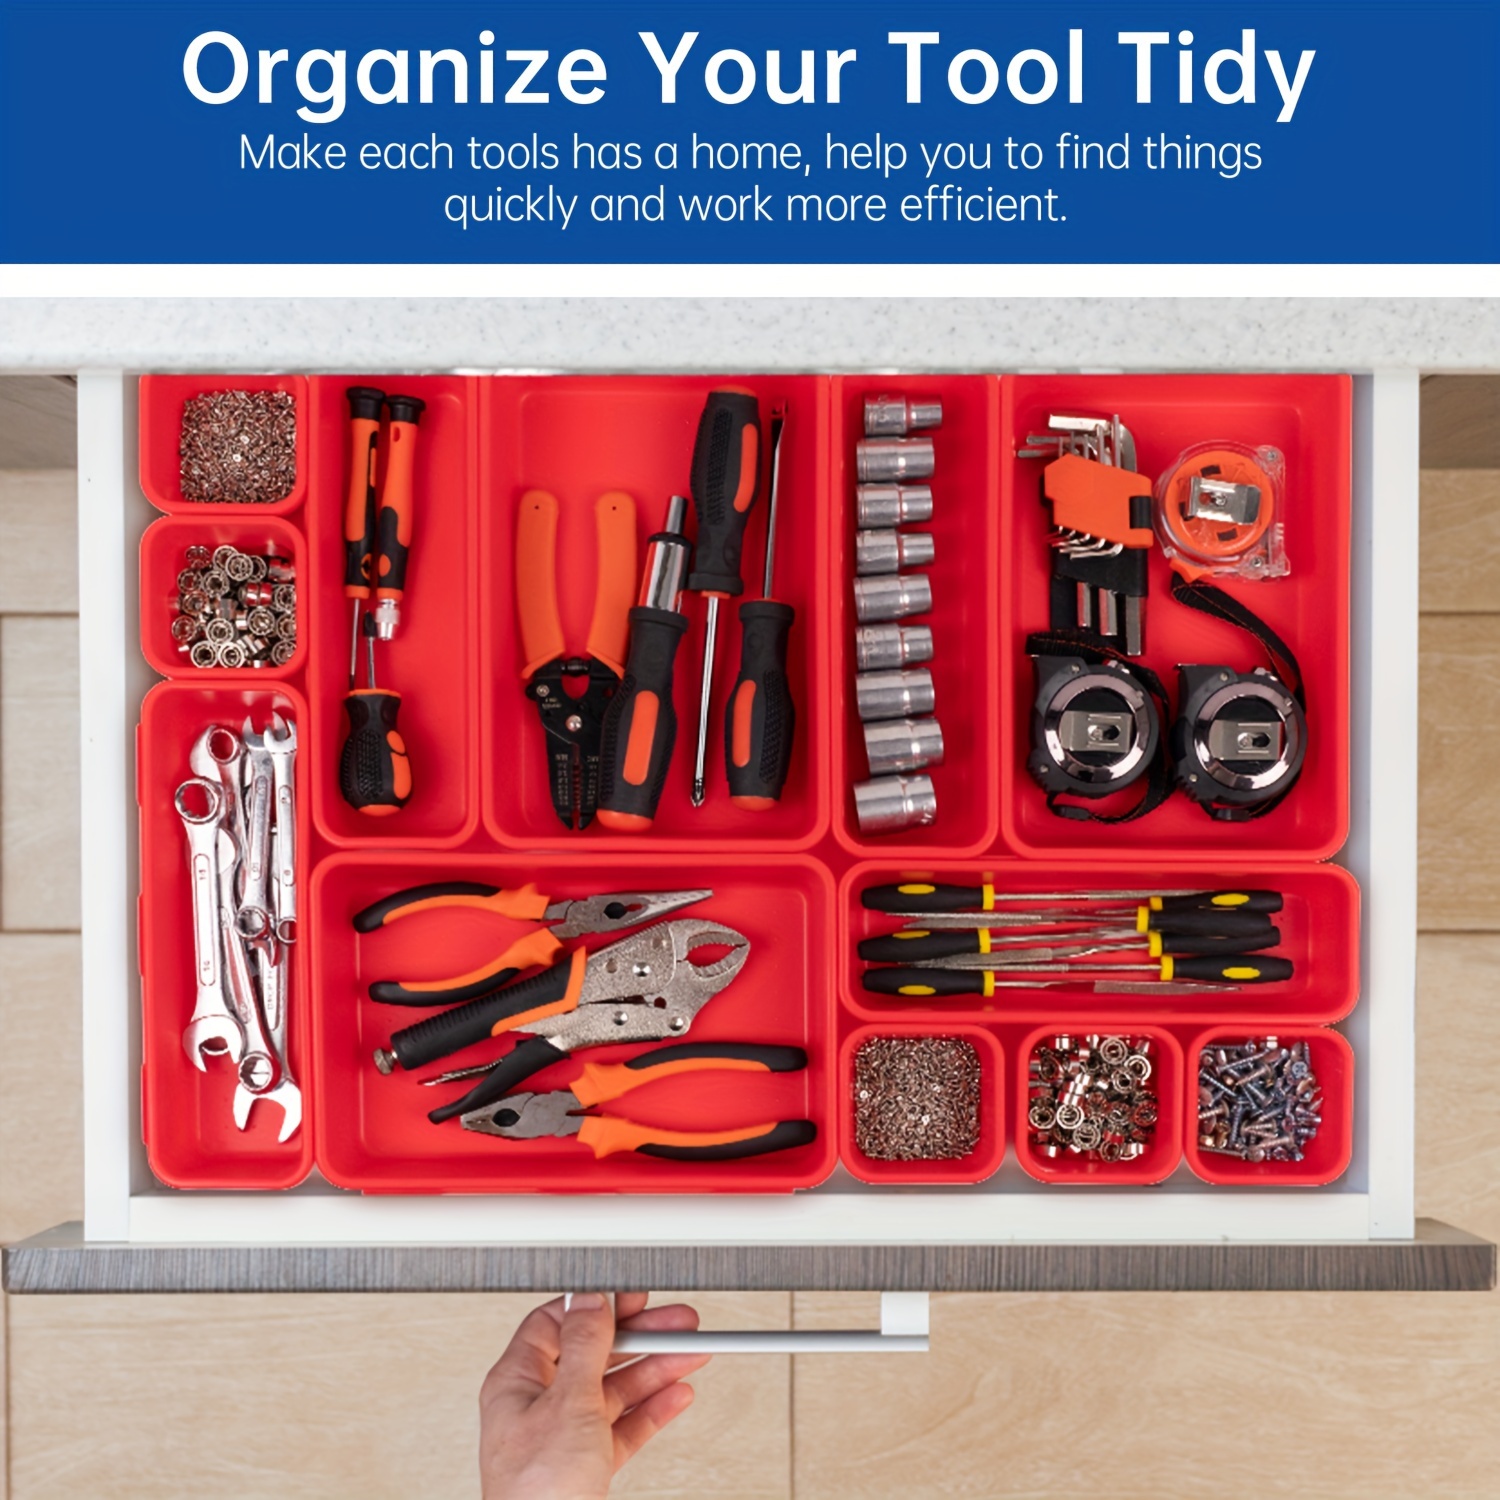 3 Small Parts Storage Ideas to Keep You Organized